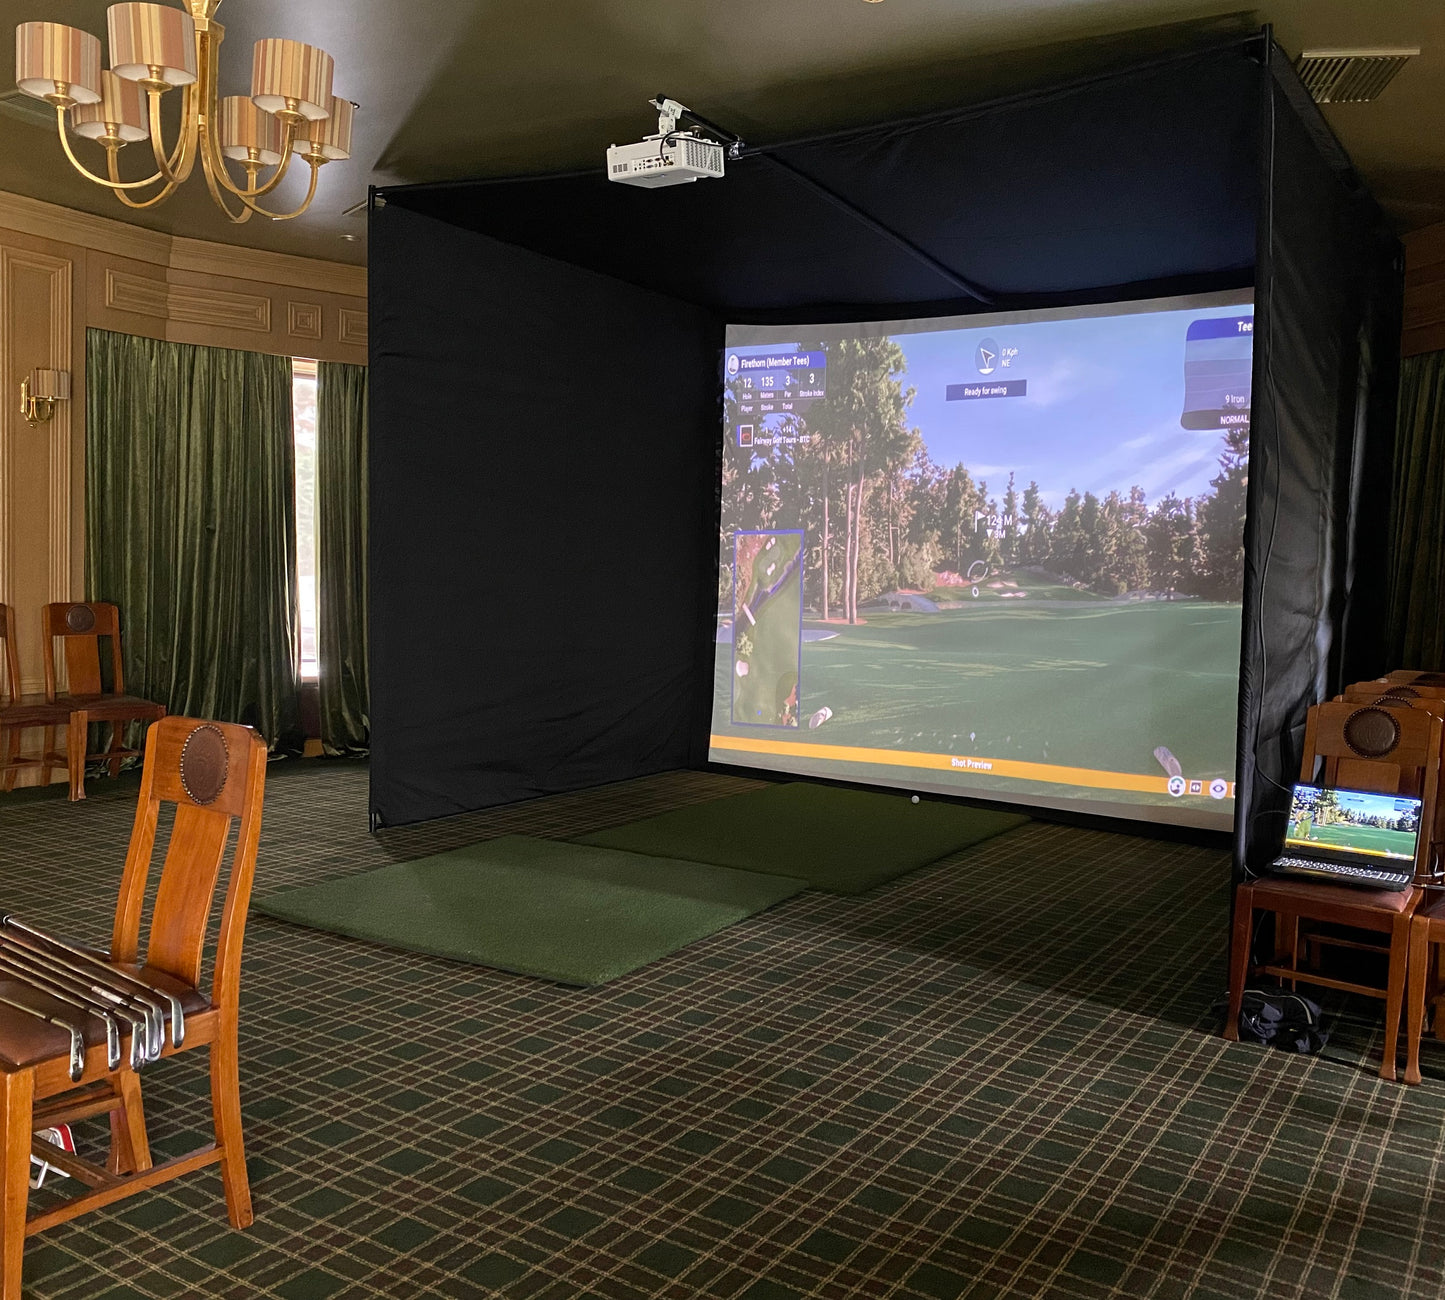 BYO Launch Monitor Enclosure Simulator Package - Home Golfing Revolution